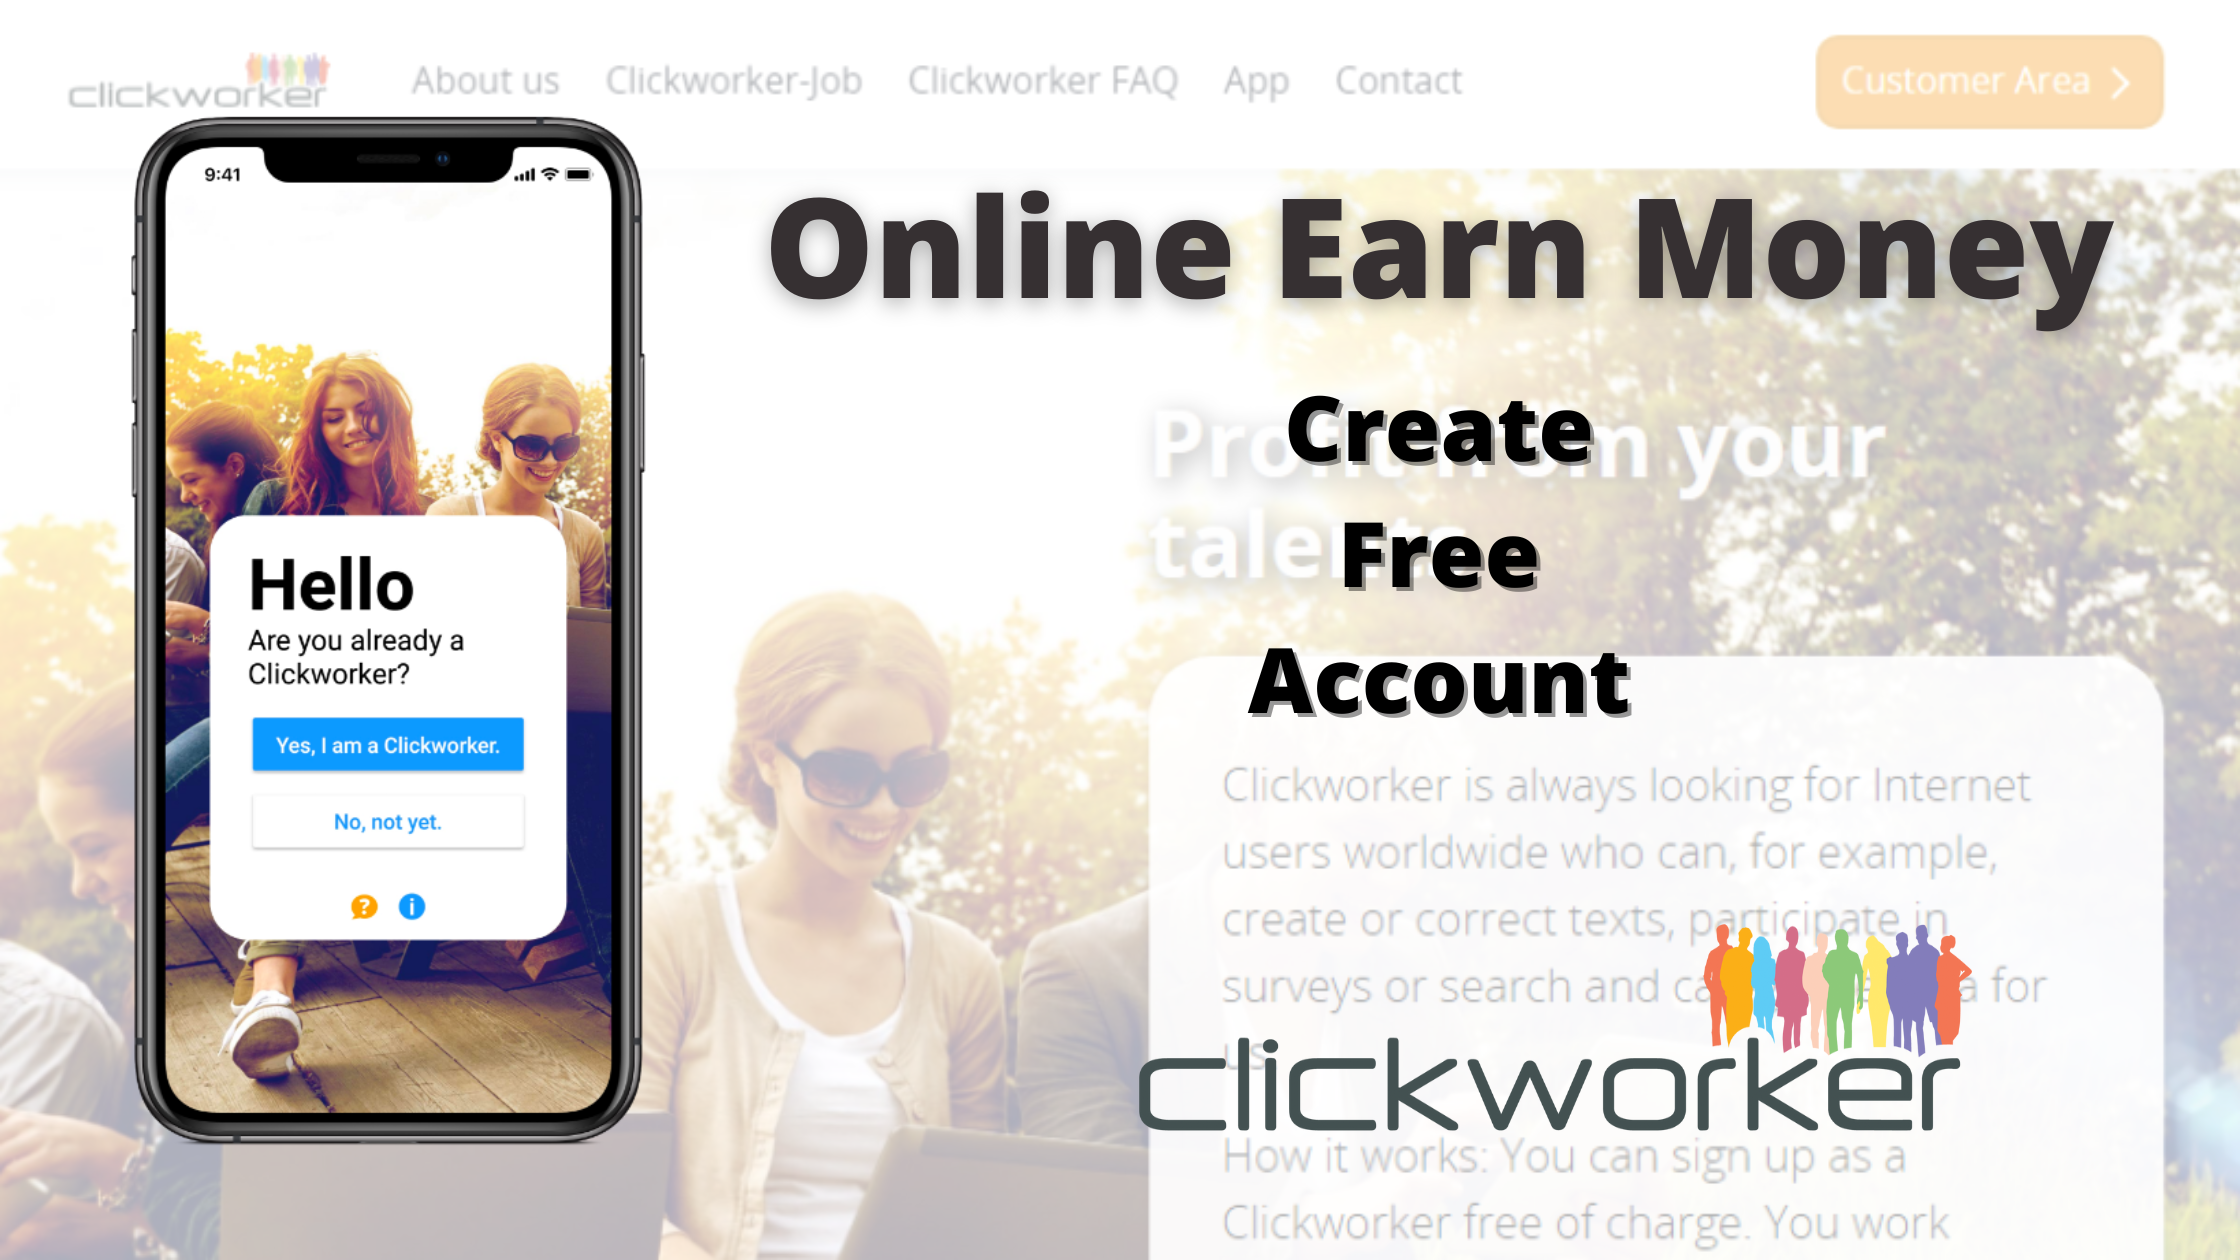 Online Earn Money with ClickWorker